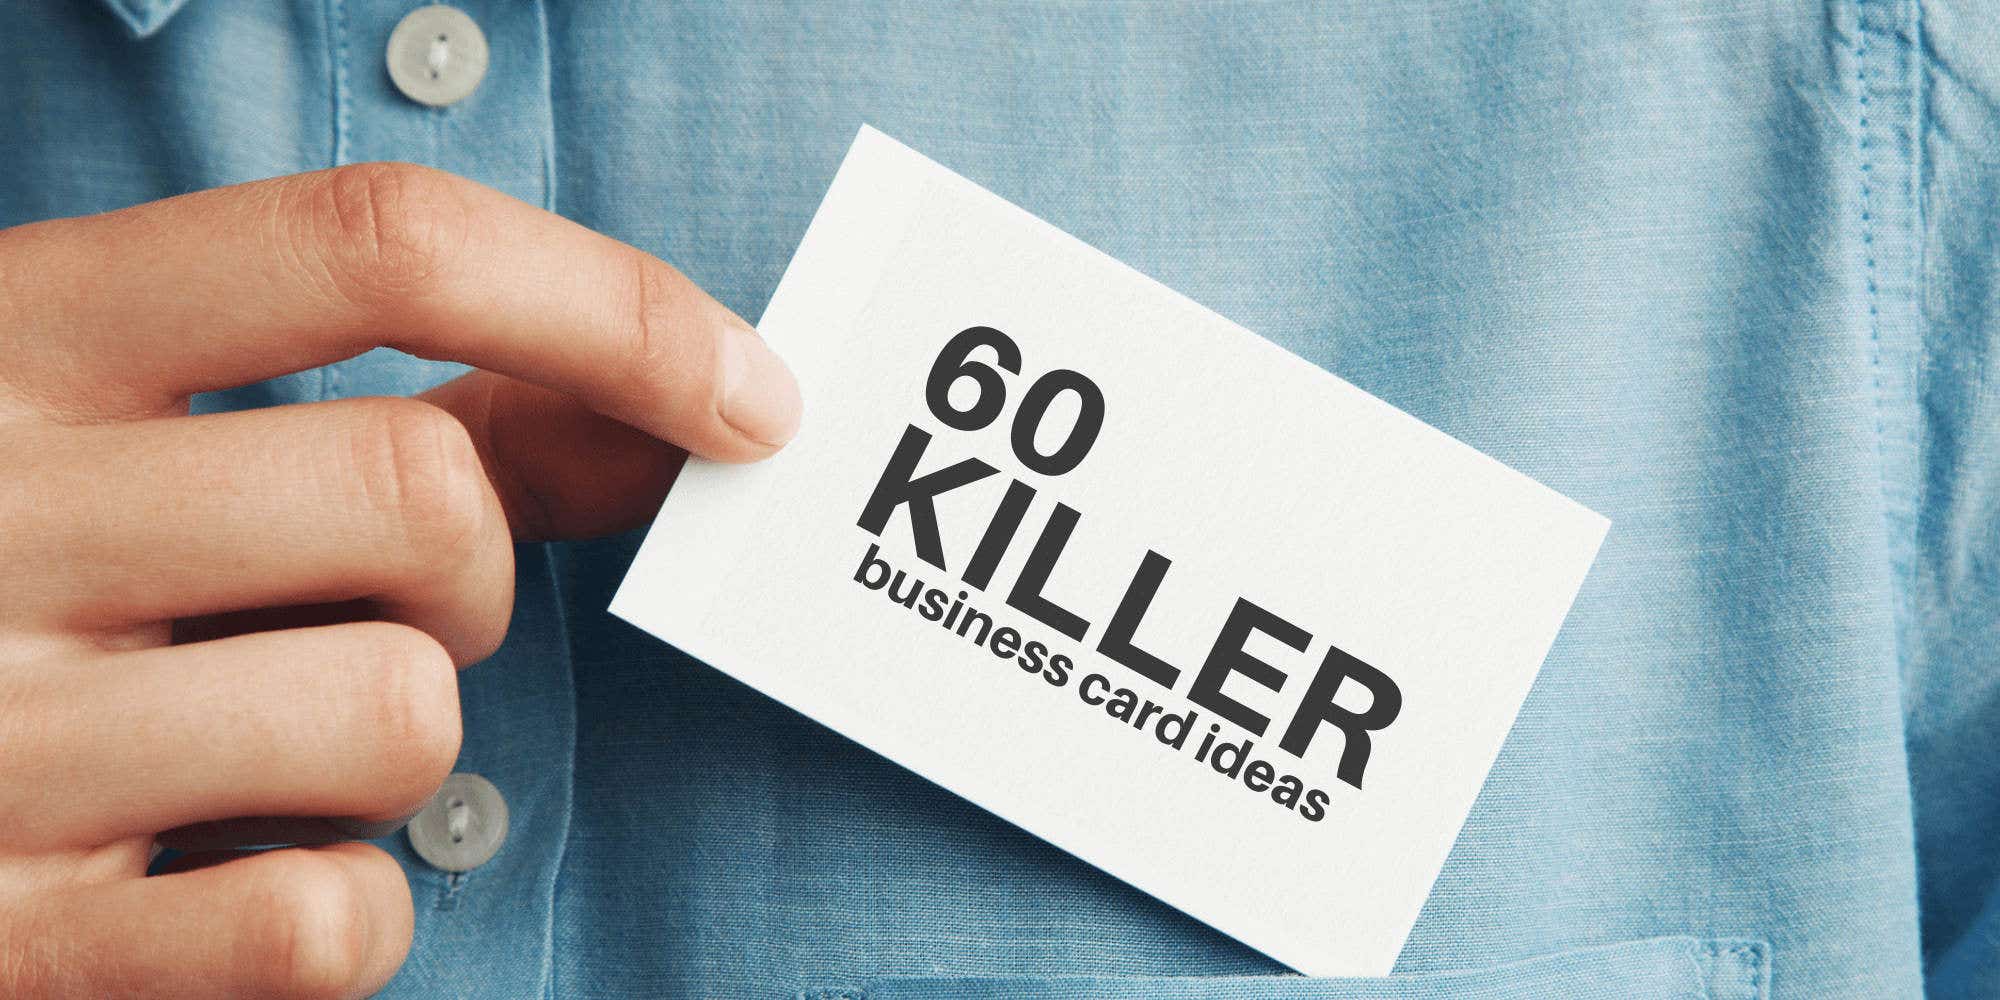 60 modern business cards to make a killer first impression ...